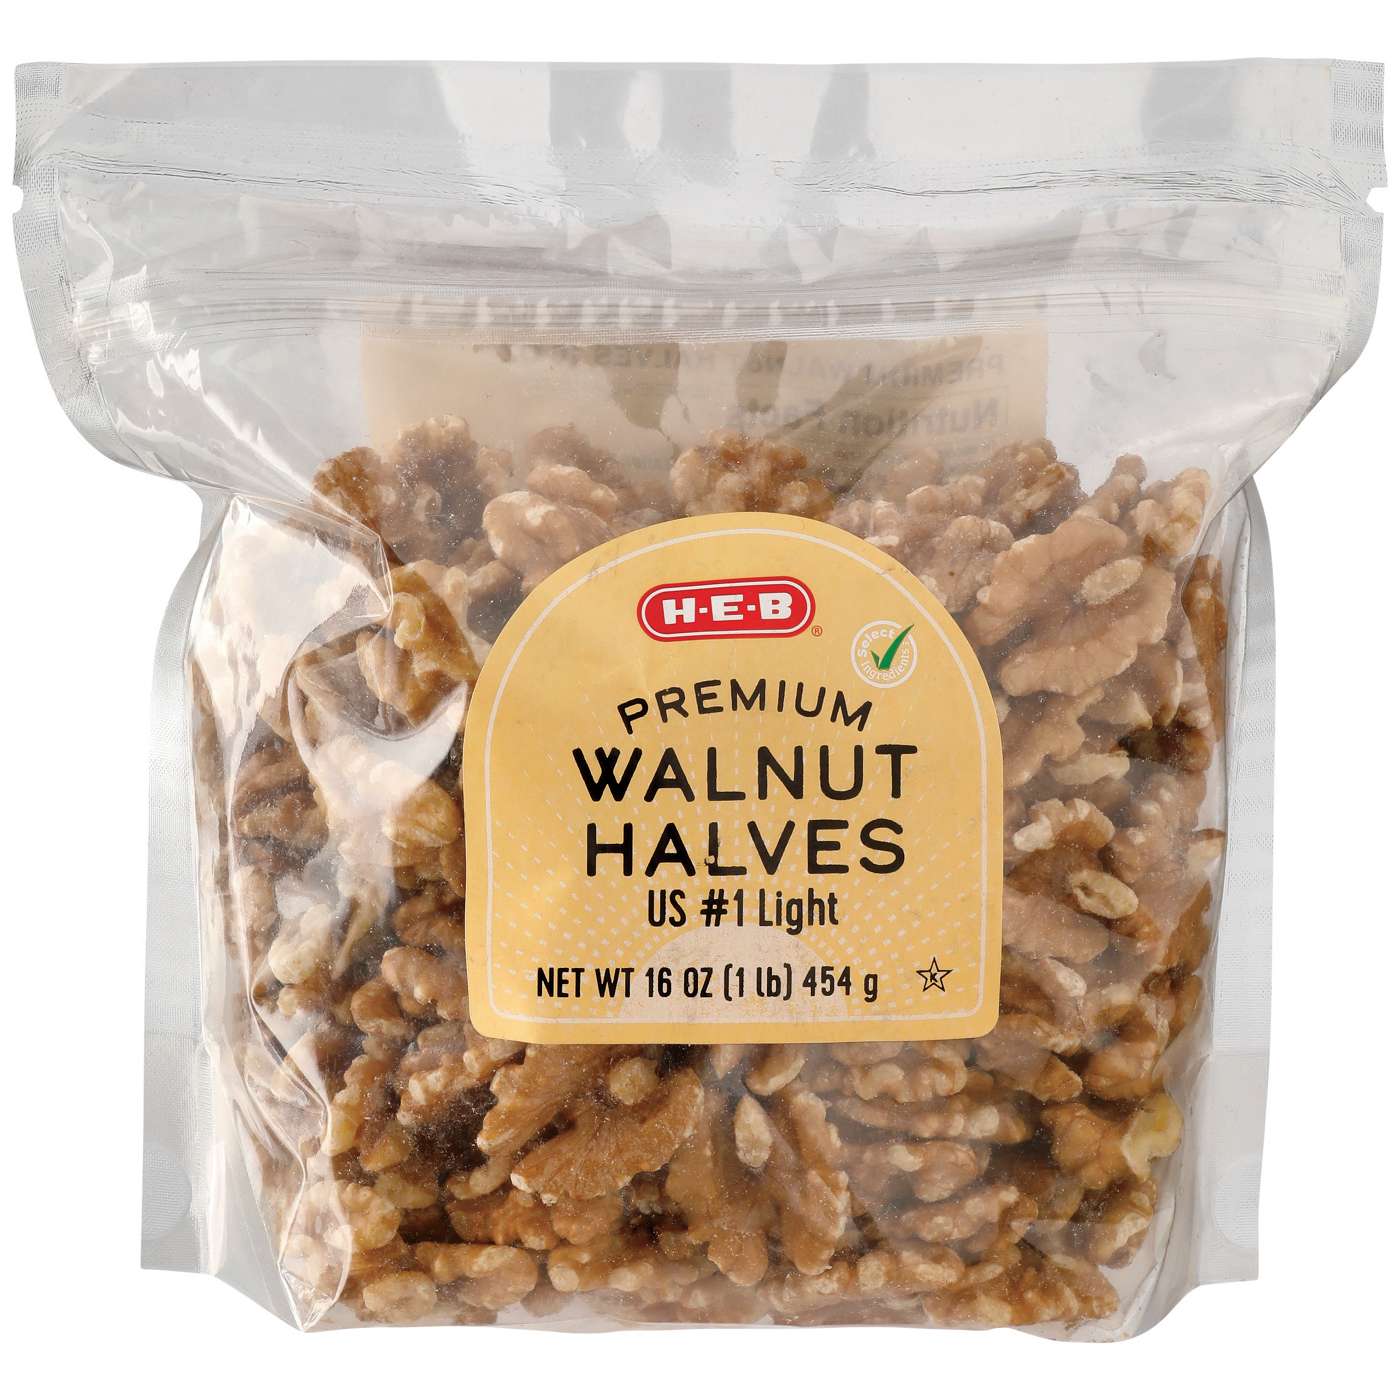 H-E-B Walnut Halves; image 1 of 2